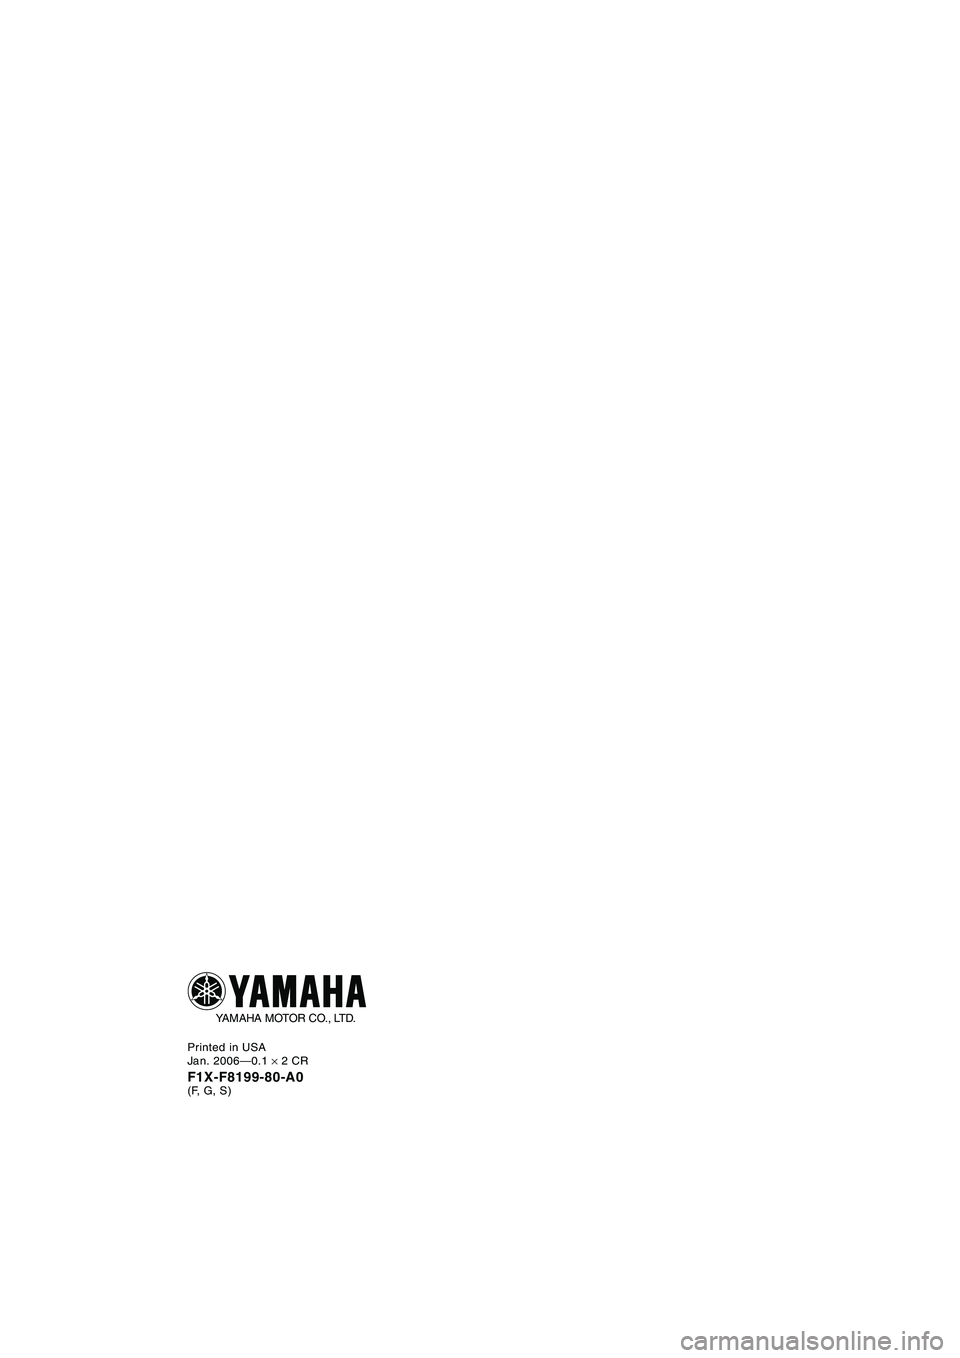 YAMAHA FX HO 2006  Manuale de Empleo (in Spanish) Printed in USA
Jan. 2006—0.1 × 2 CR
F1X-F8199-80-A0(F, G, S)
YAMAHA MOTOR CO., LTD.
U-WC_Cover4_F1X_80-A.fm  Page 1  Tuesday, January 31, 2006  10:35 AM 